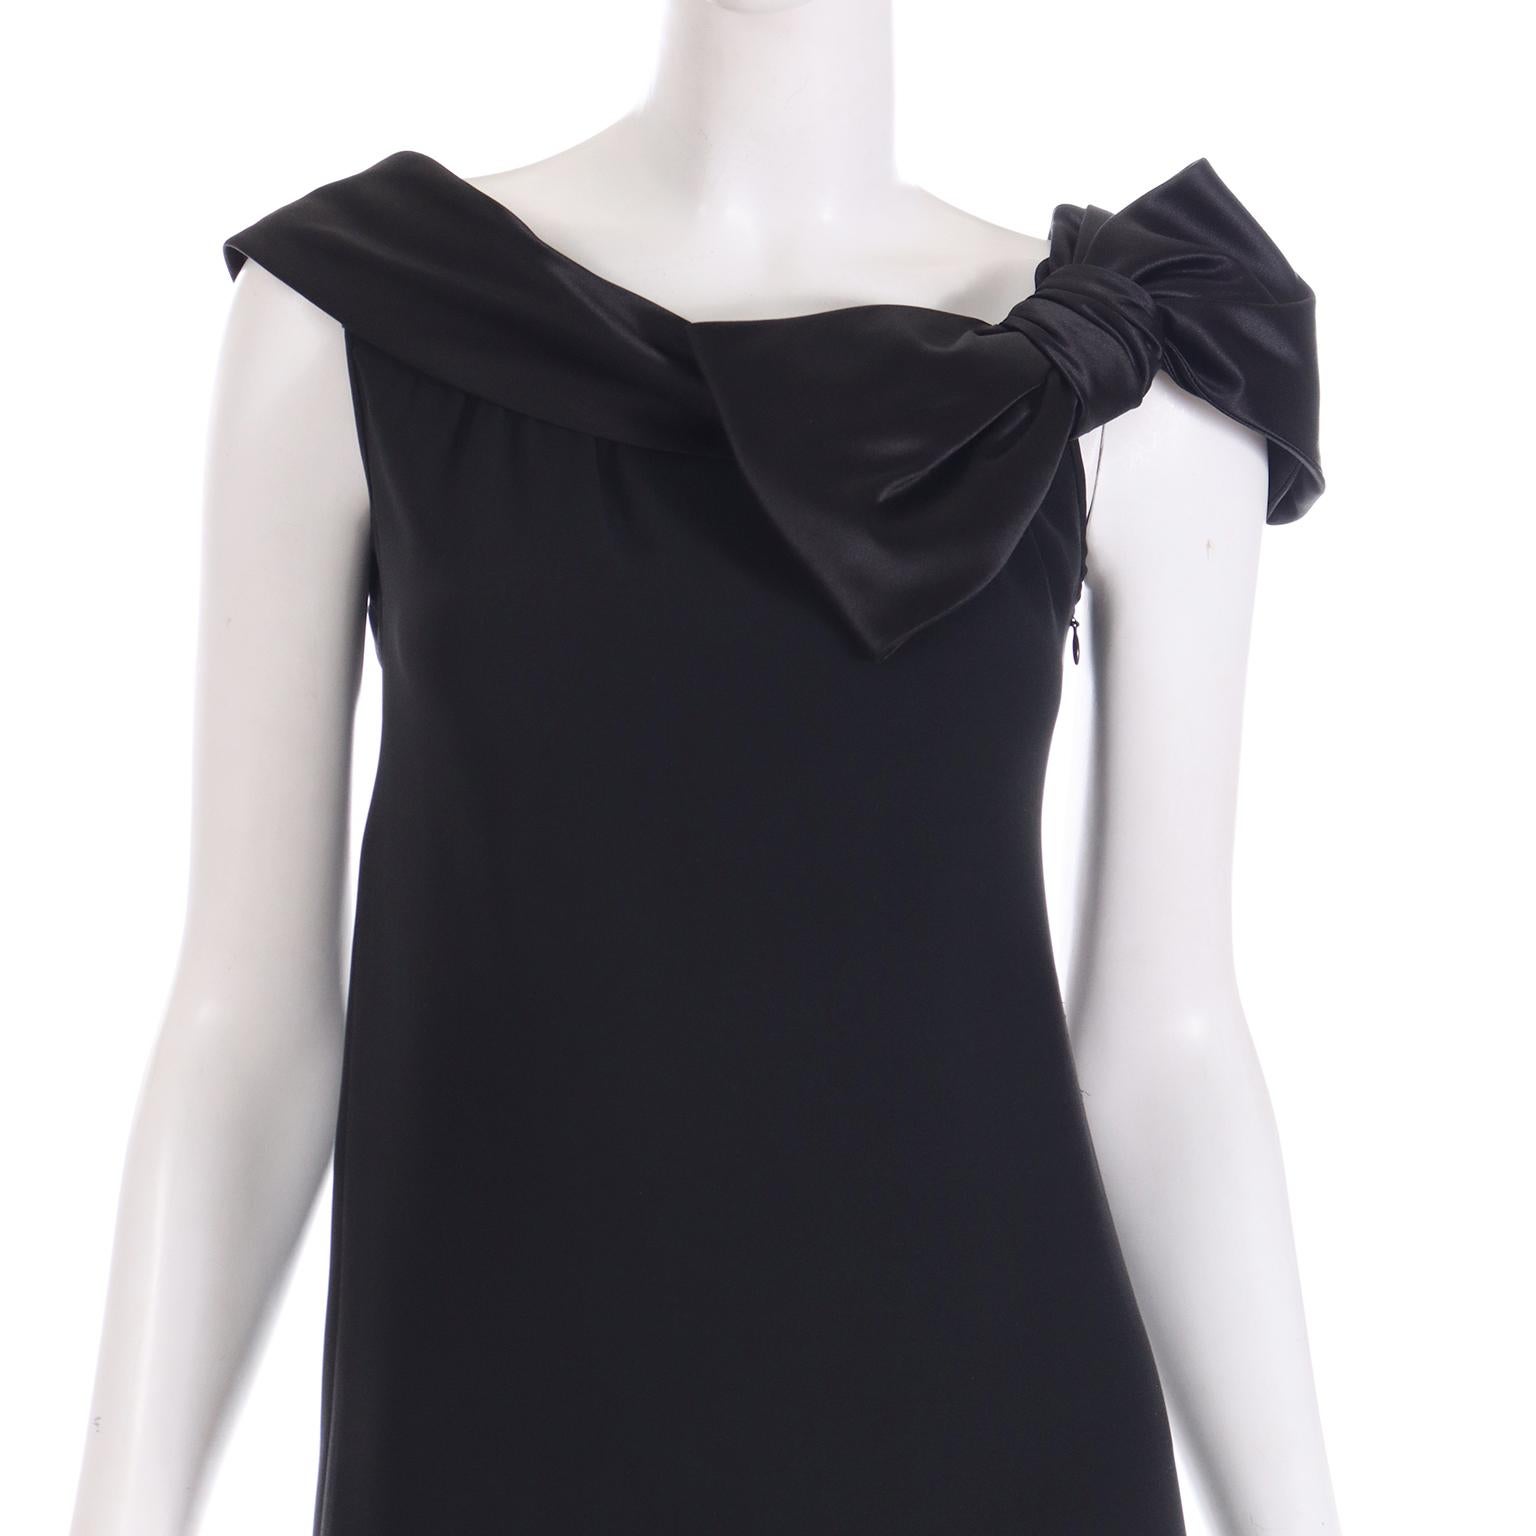 Valentino Garavani 2008 Documented Black Silk Crepe Evening Dress w Satin Bow For Sale 1